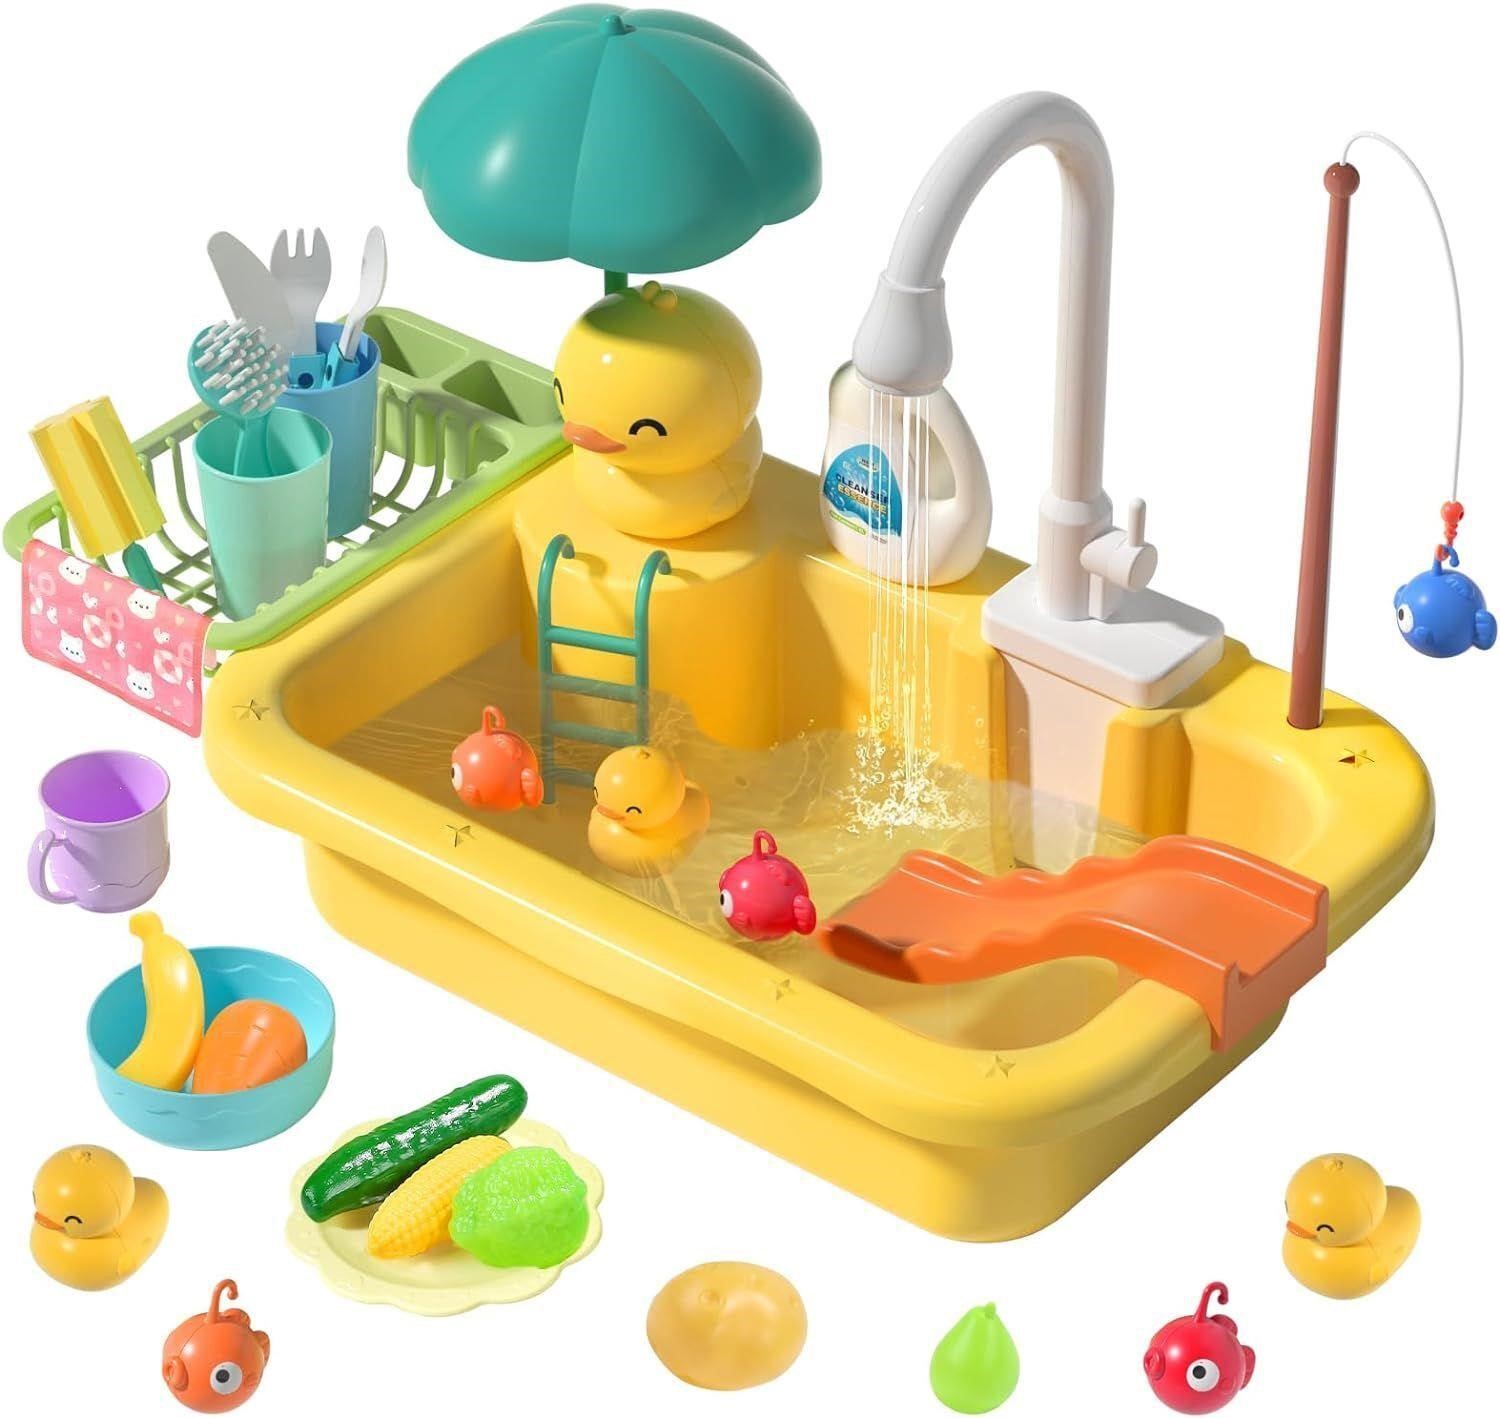 Used $39 Kids Kitchen Sink Toys